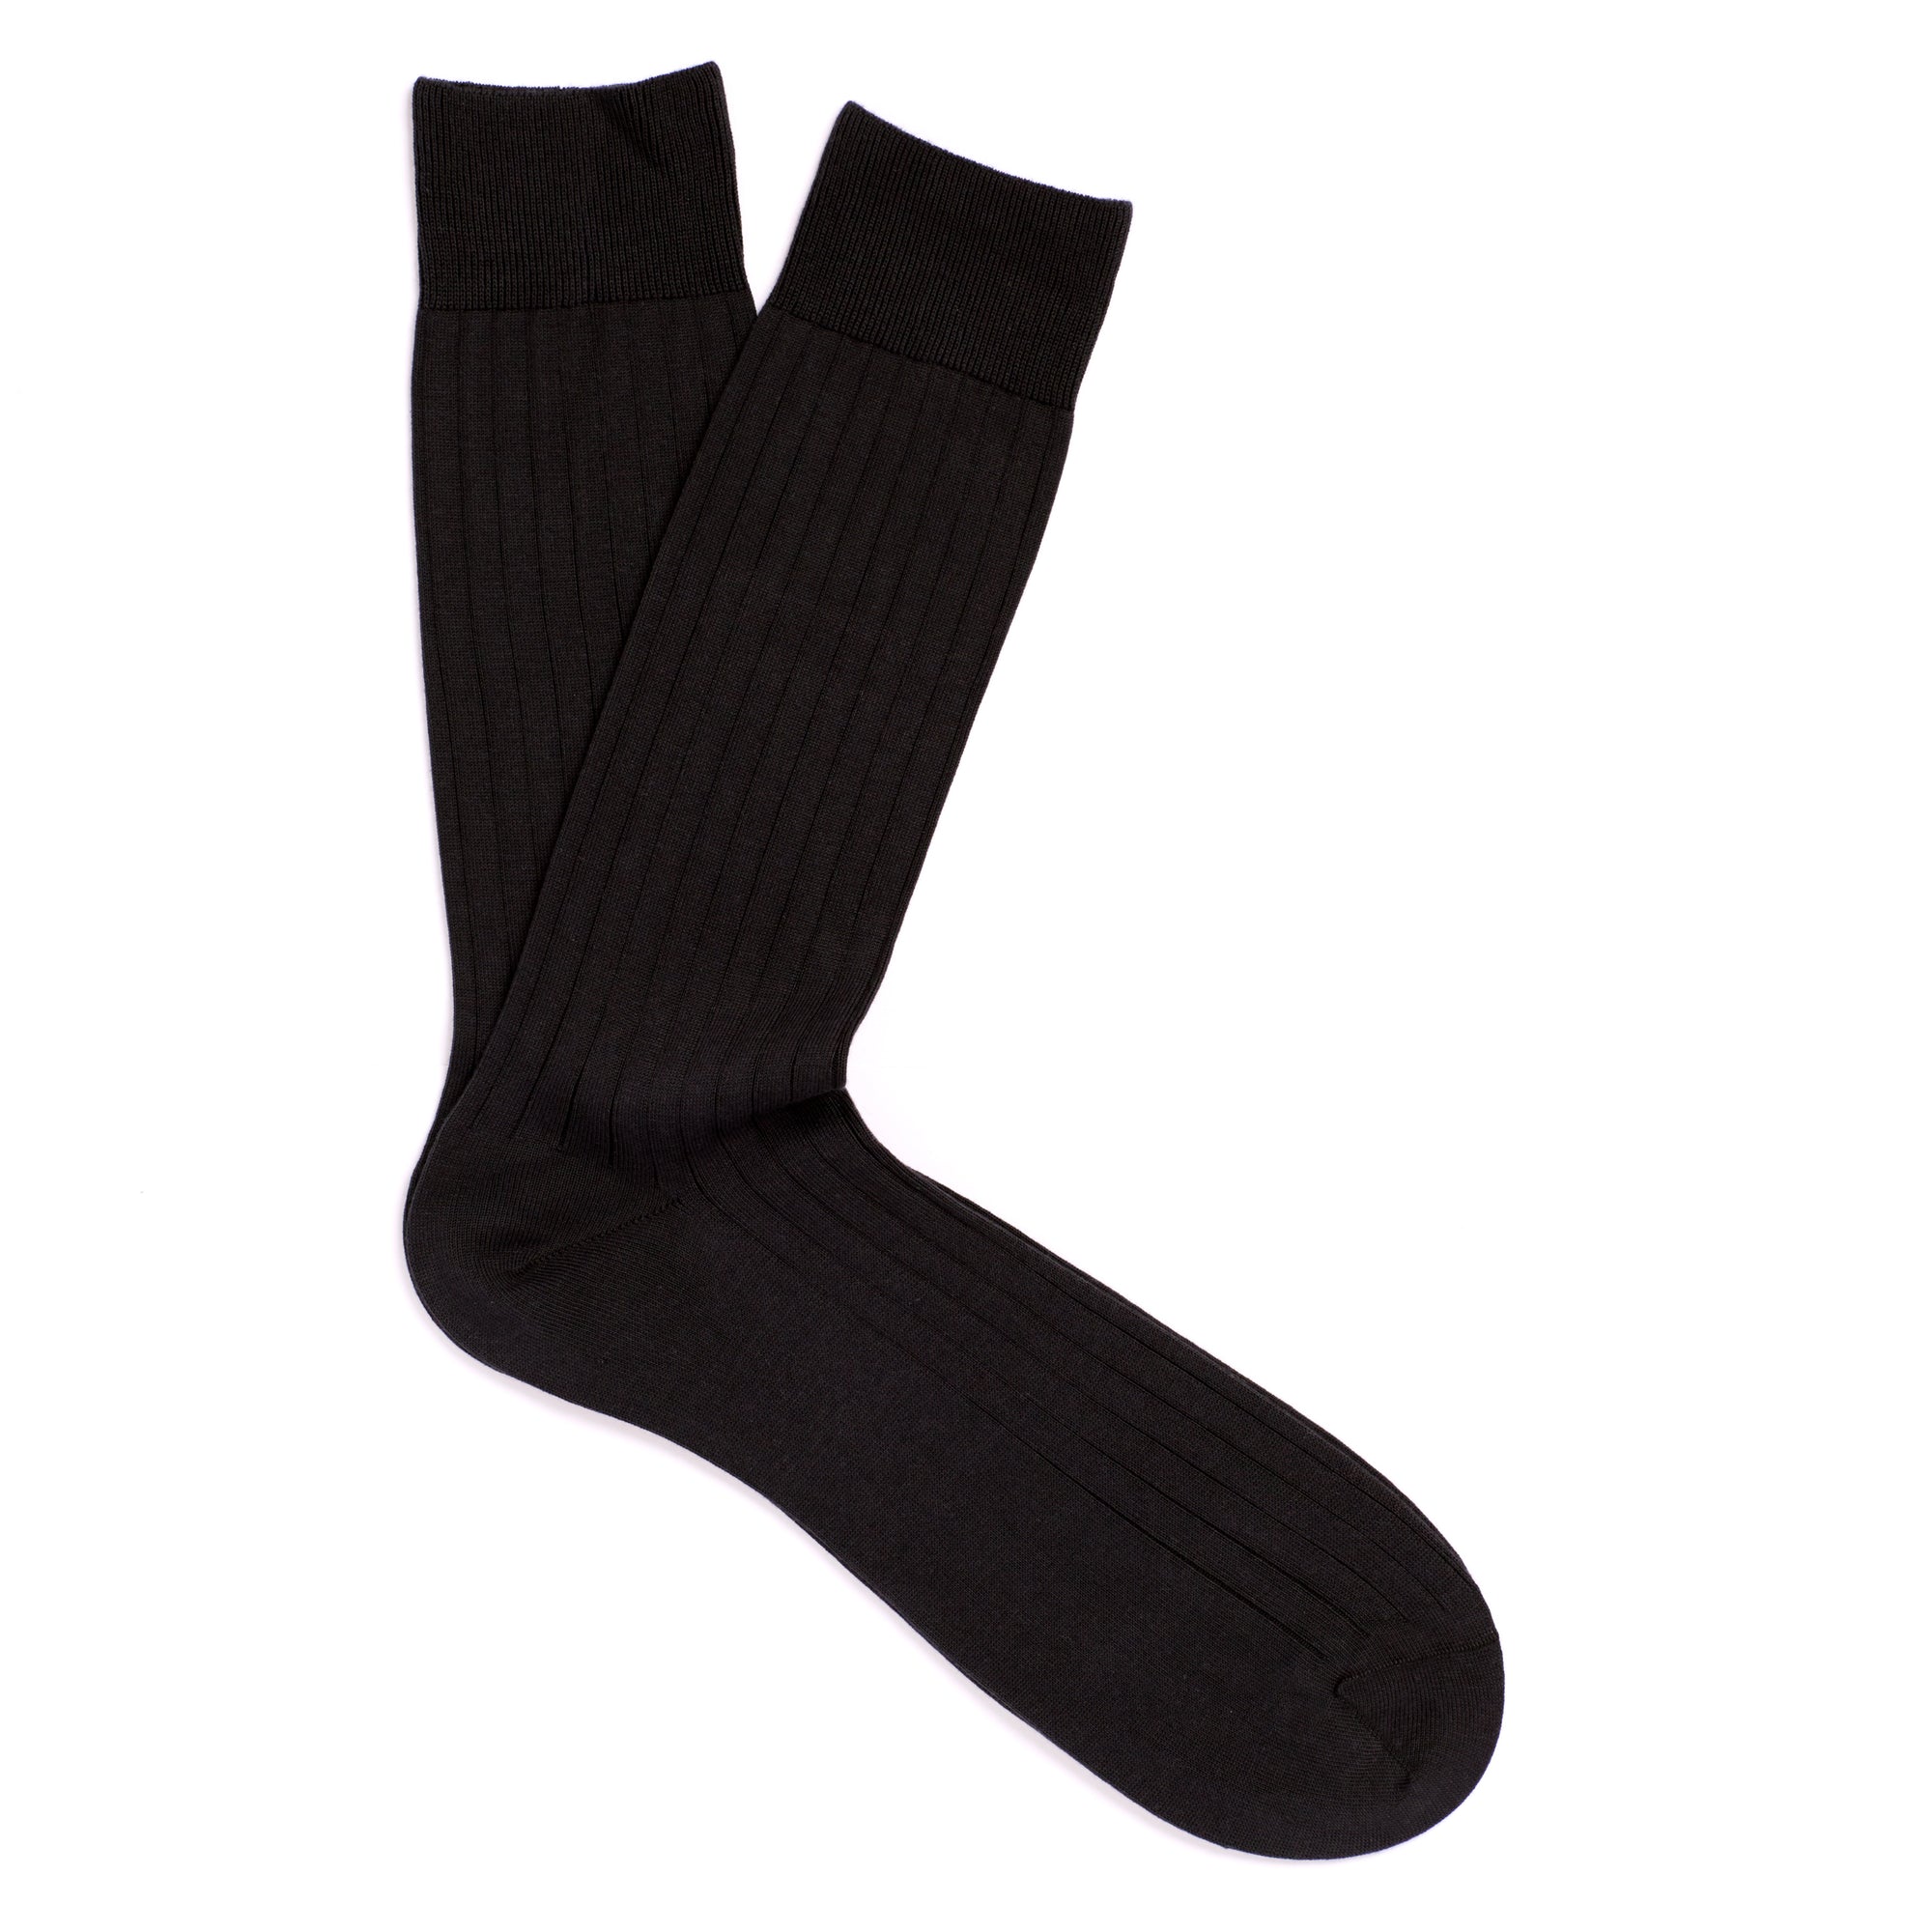 Solespun Sea Island Cotton Socks in Black